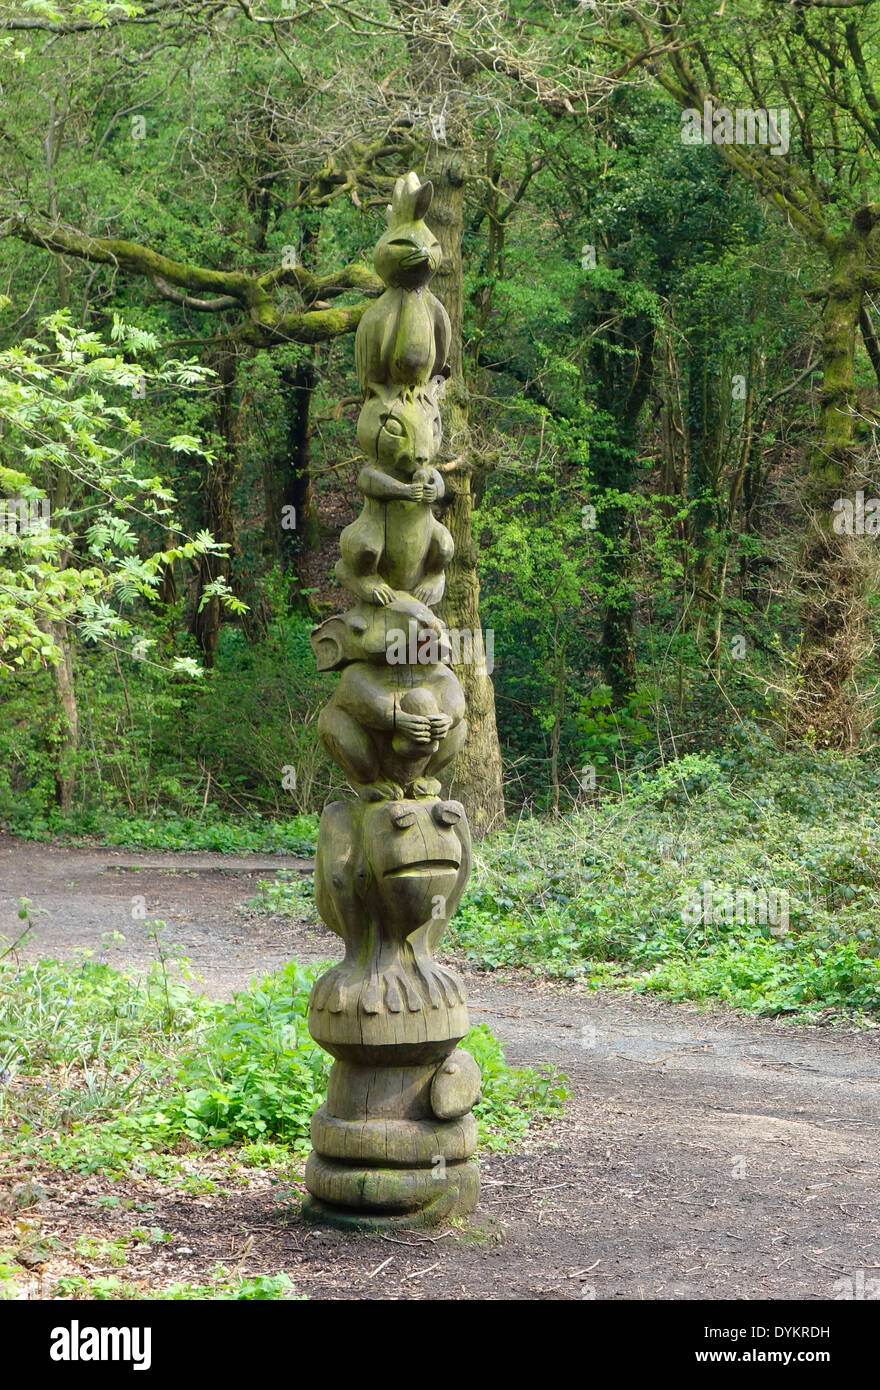 Sculptures at Saltwells Wood Local Nature Reserve, Quarry Bank, West Midlands, England, UK. Part of the Sculpture Trail Walk. Stock Photo